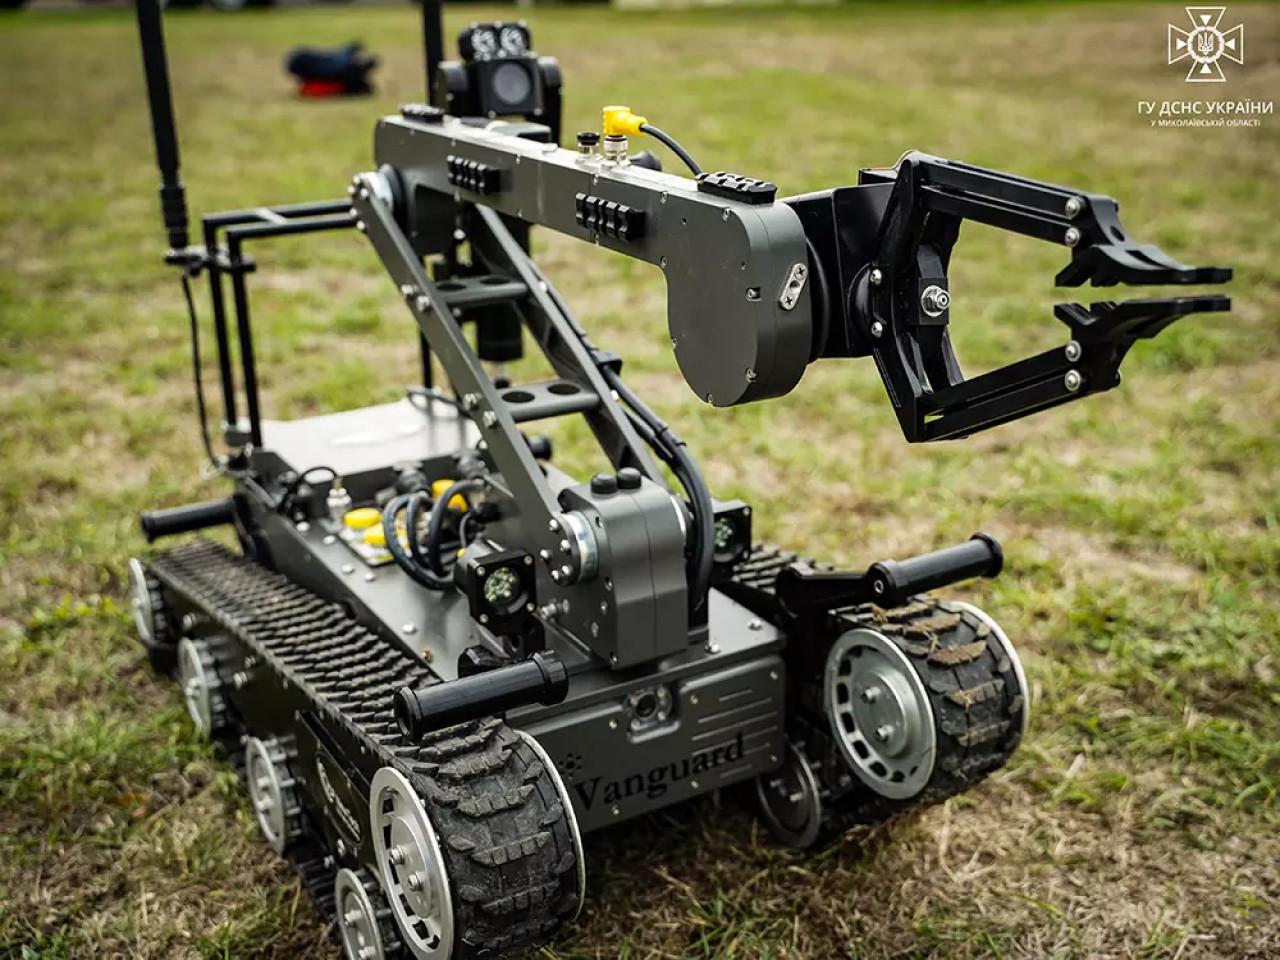 Digital Vanguard-S, el robot buscaminas de Canadá. Foto: Wikimedia Commons.